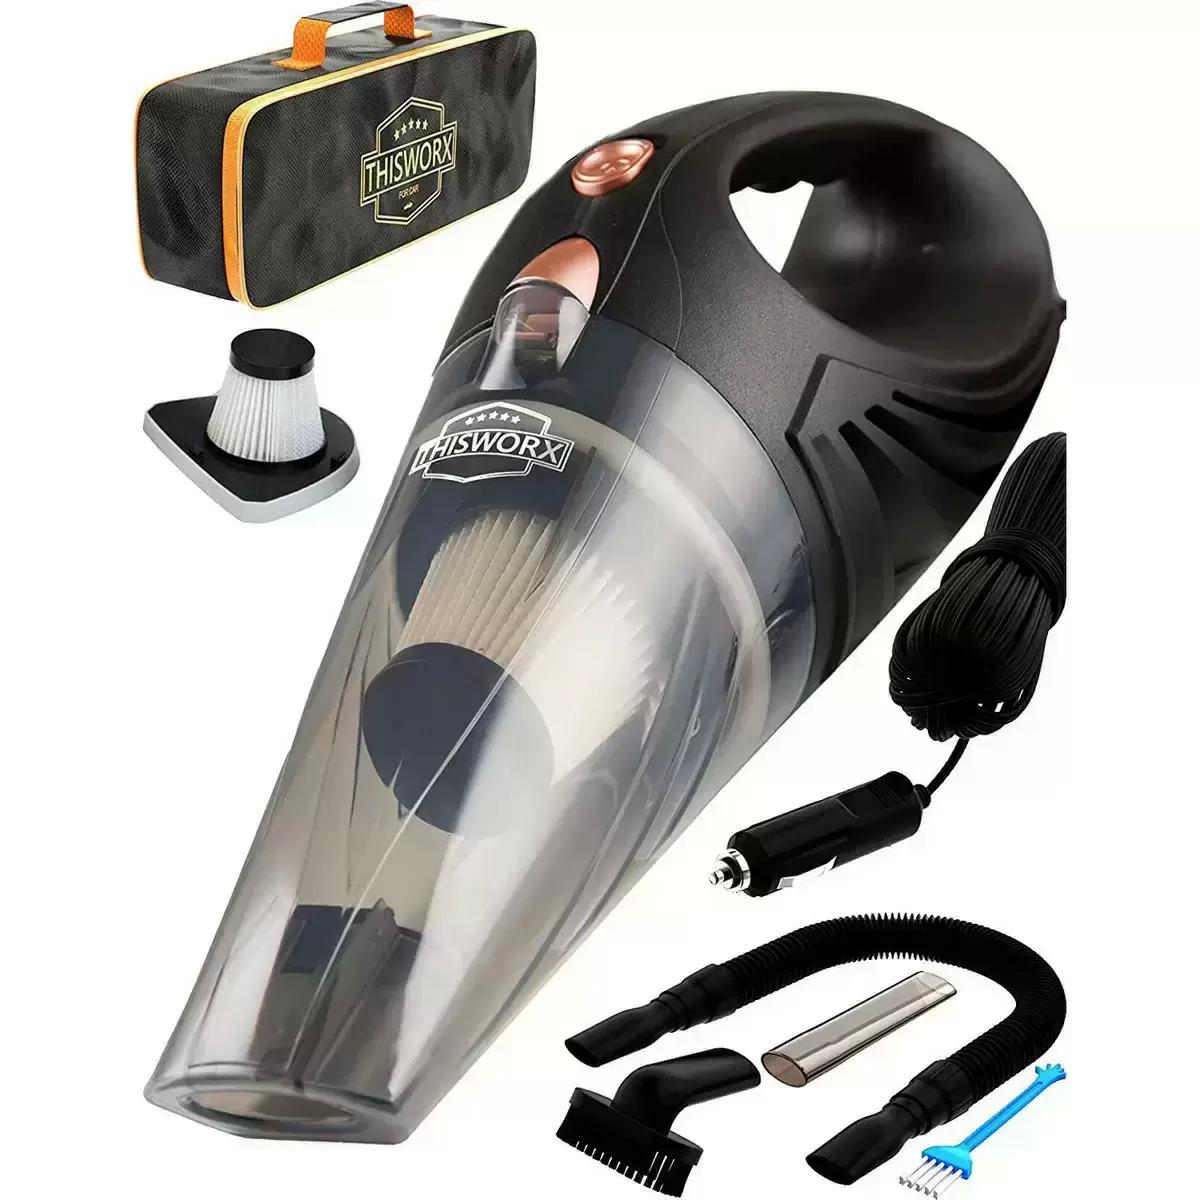 ThisWorx Portable Car Vacuum Cleaner for $19.99